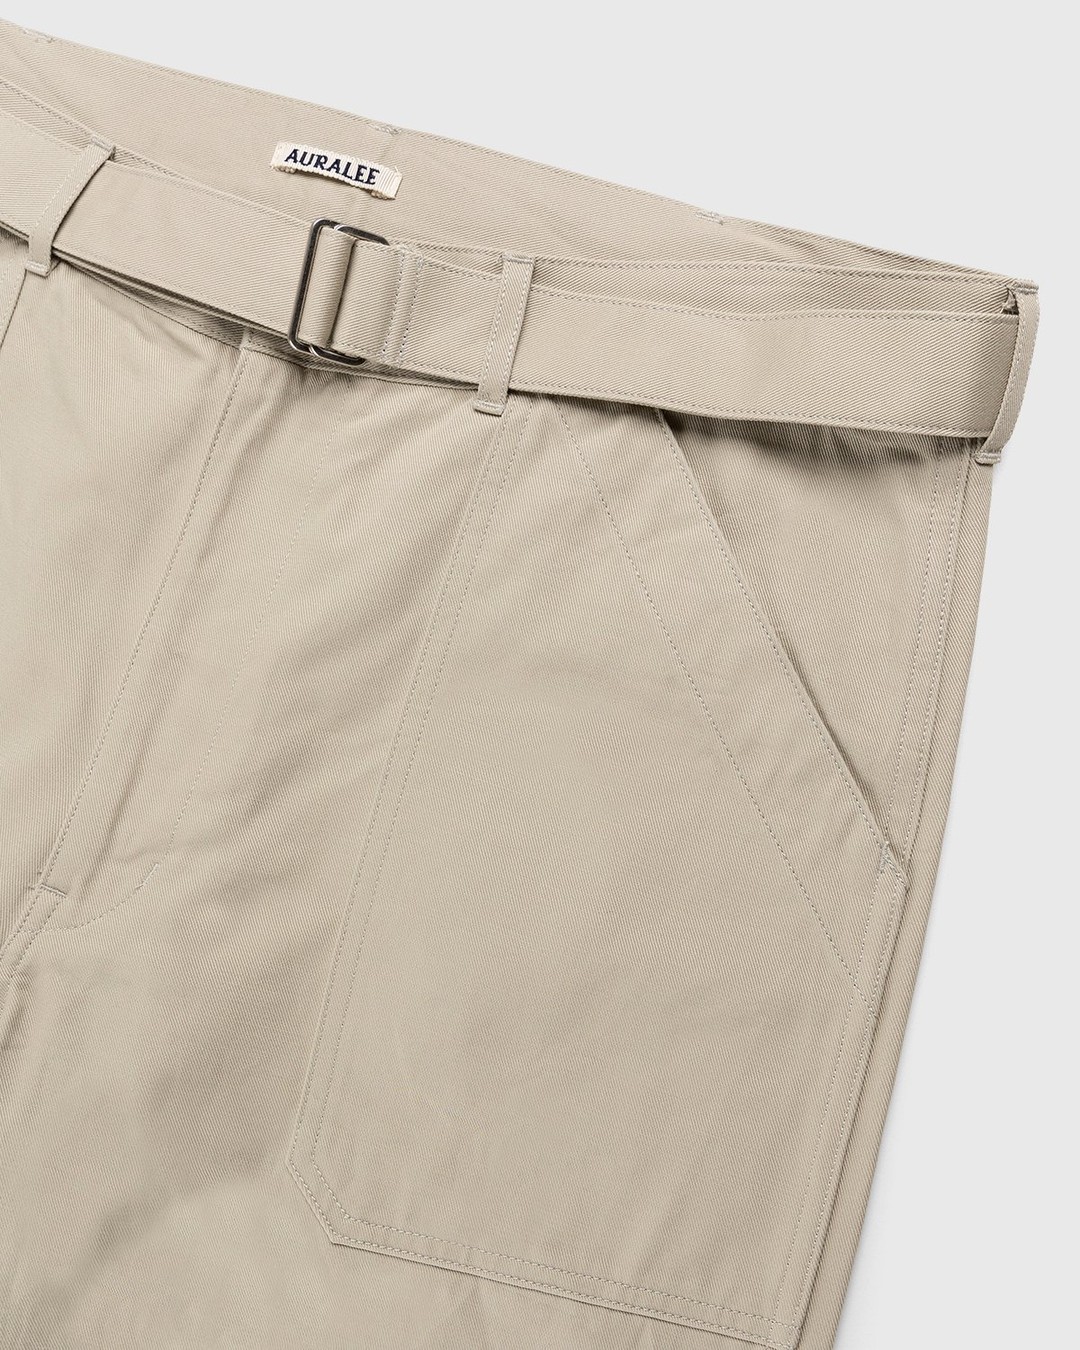 Auralee – Cotton Woven Pants Khaki - Trousers - Multi - Image 5